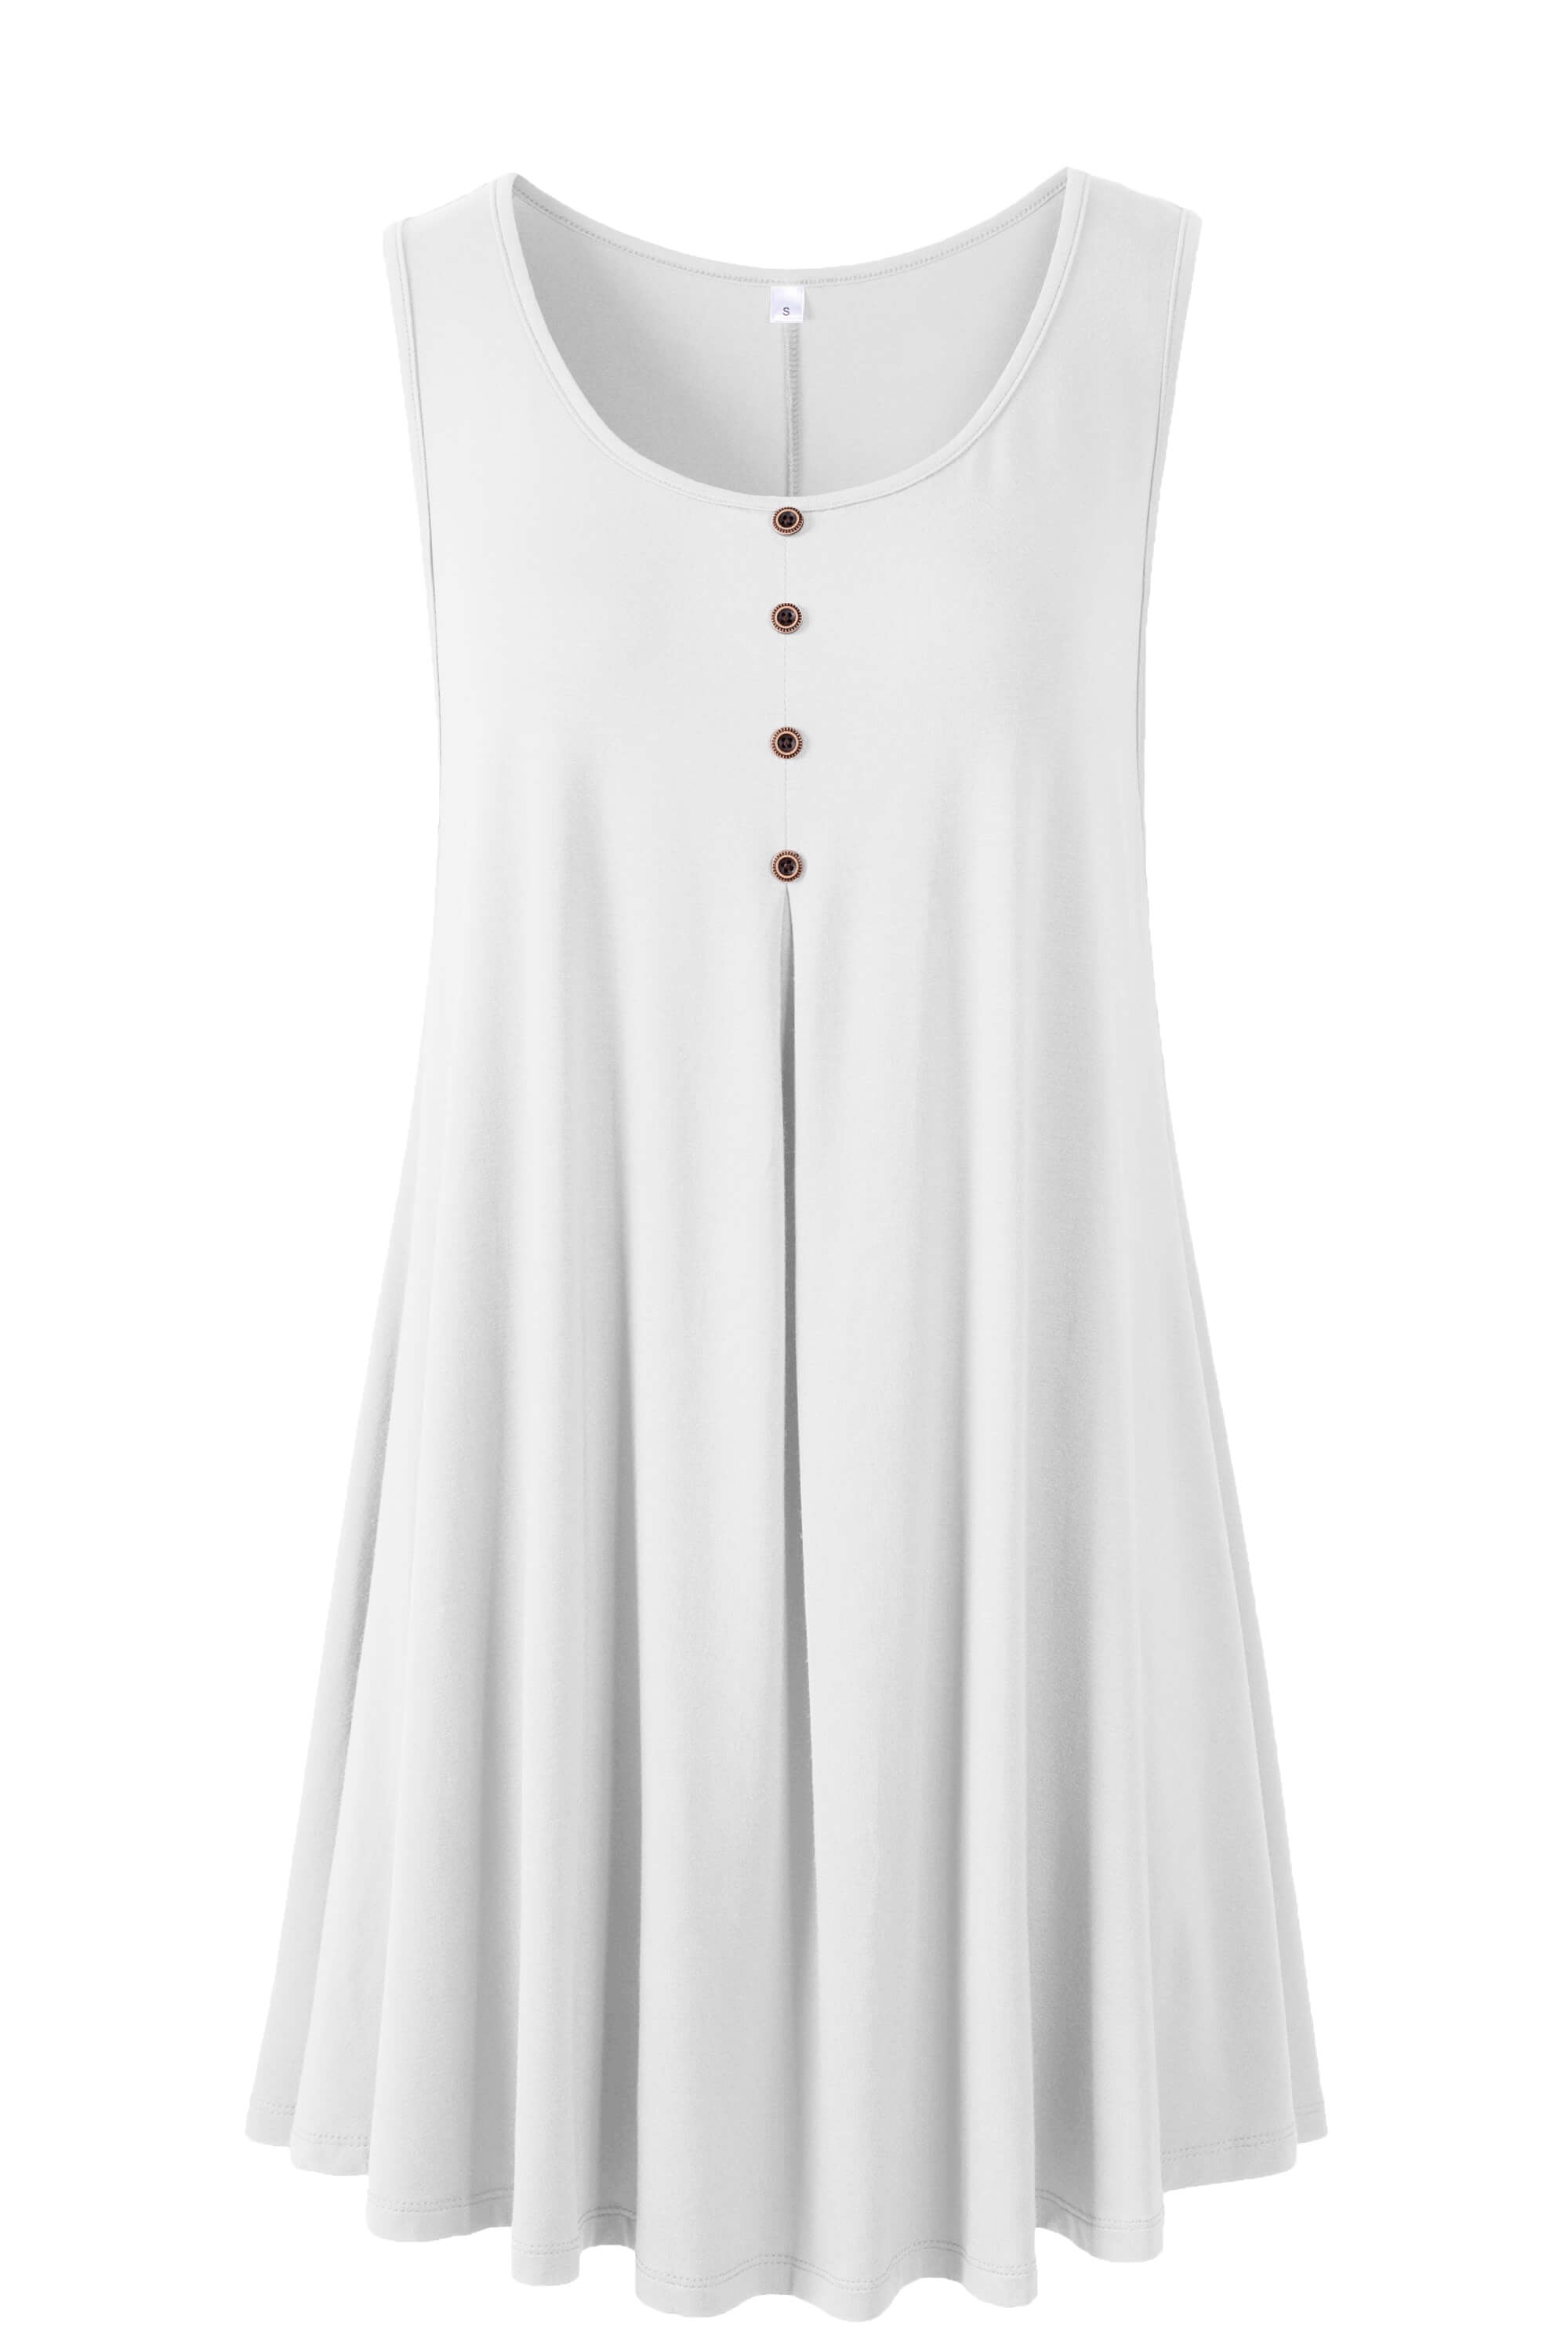 leboilalaslie Tank Tops for Women Tunic Button Sleeveless Summer Tee-8068.